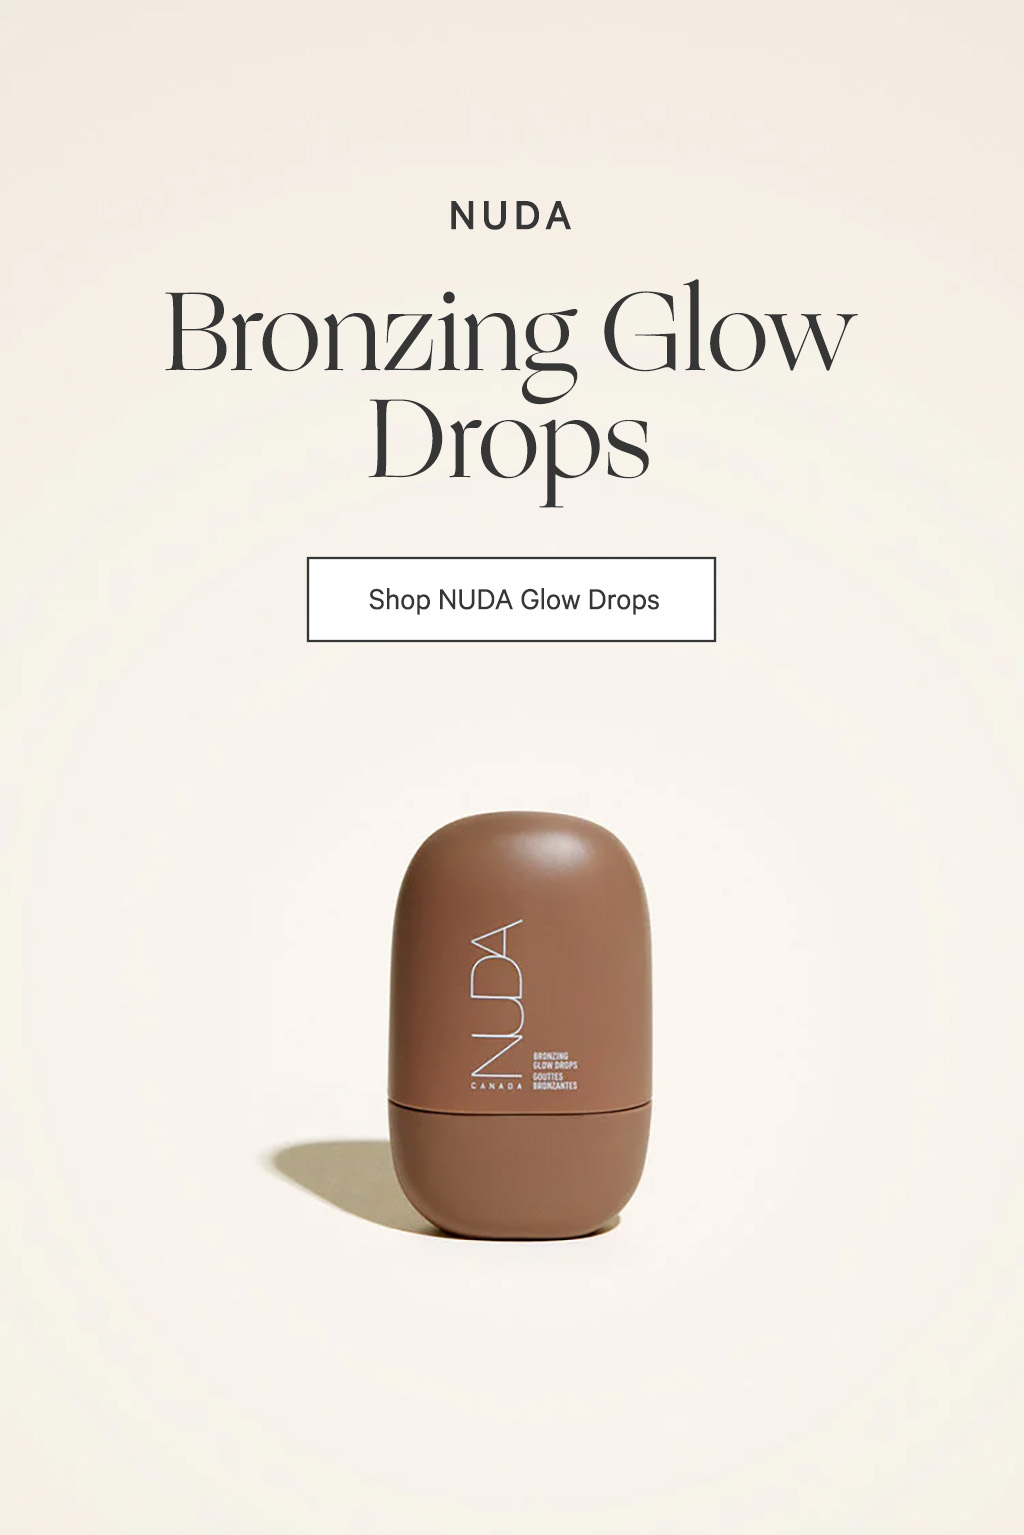 NUDA Bronzing Glow Drops